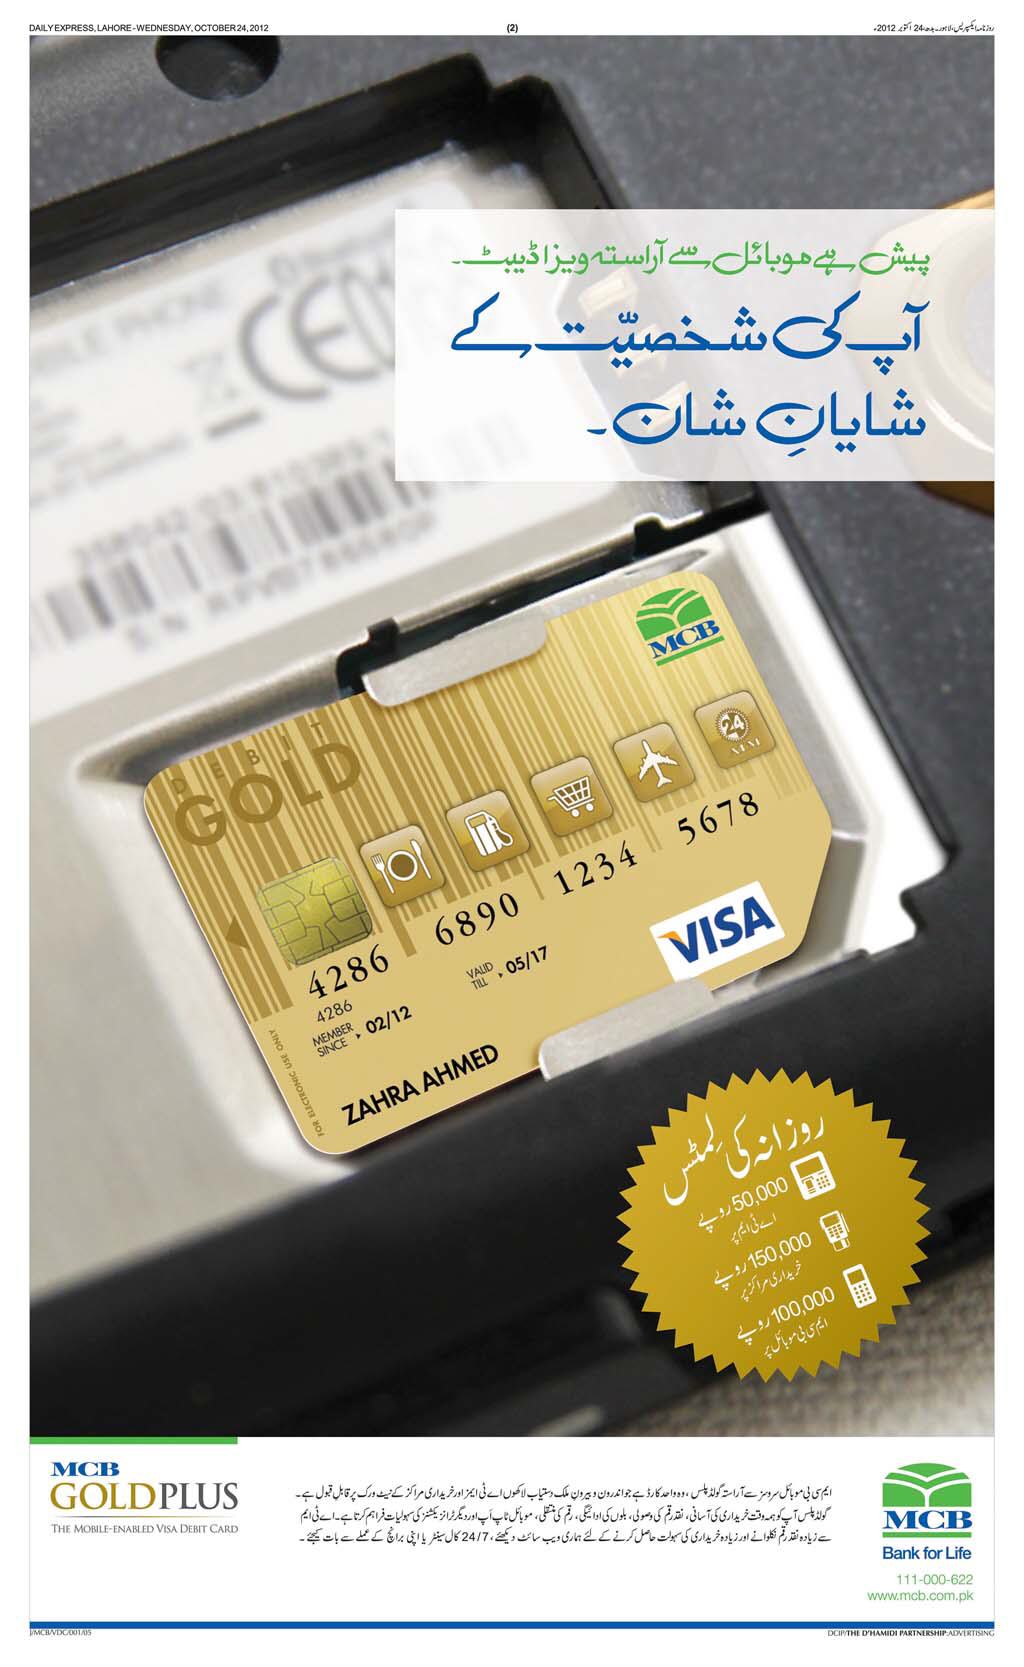 MCB Bank Gold Plus Debit Card